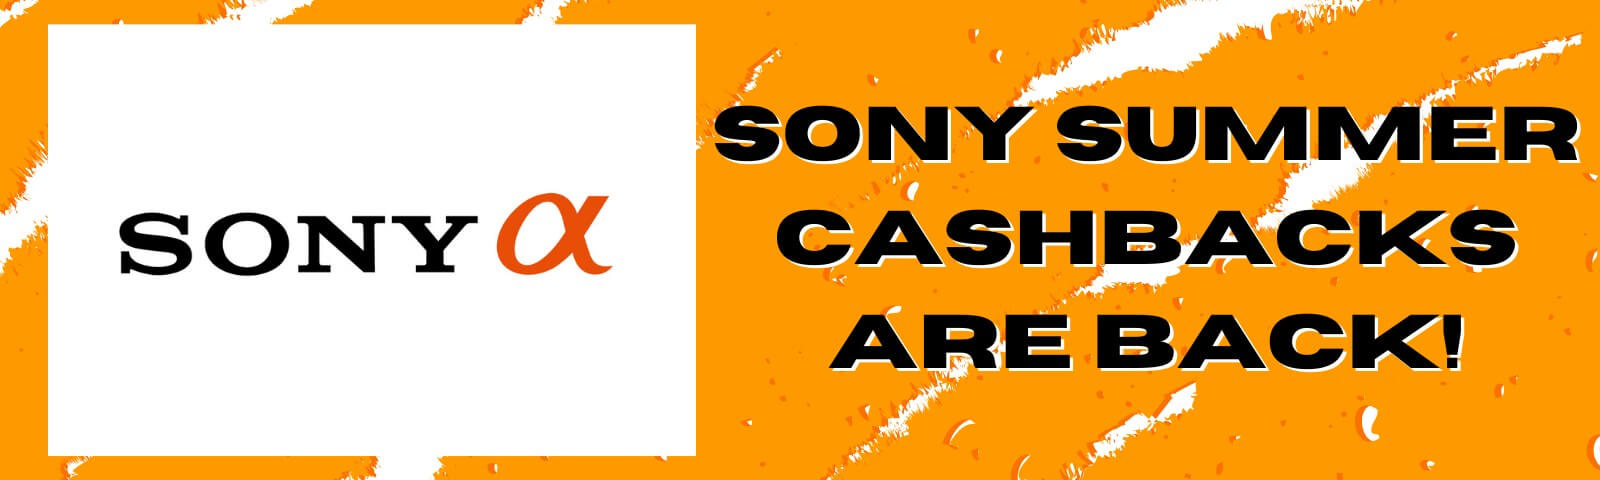 Sony Summer cashback camera sale ireland